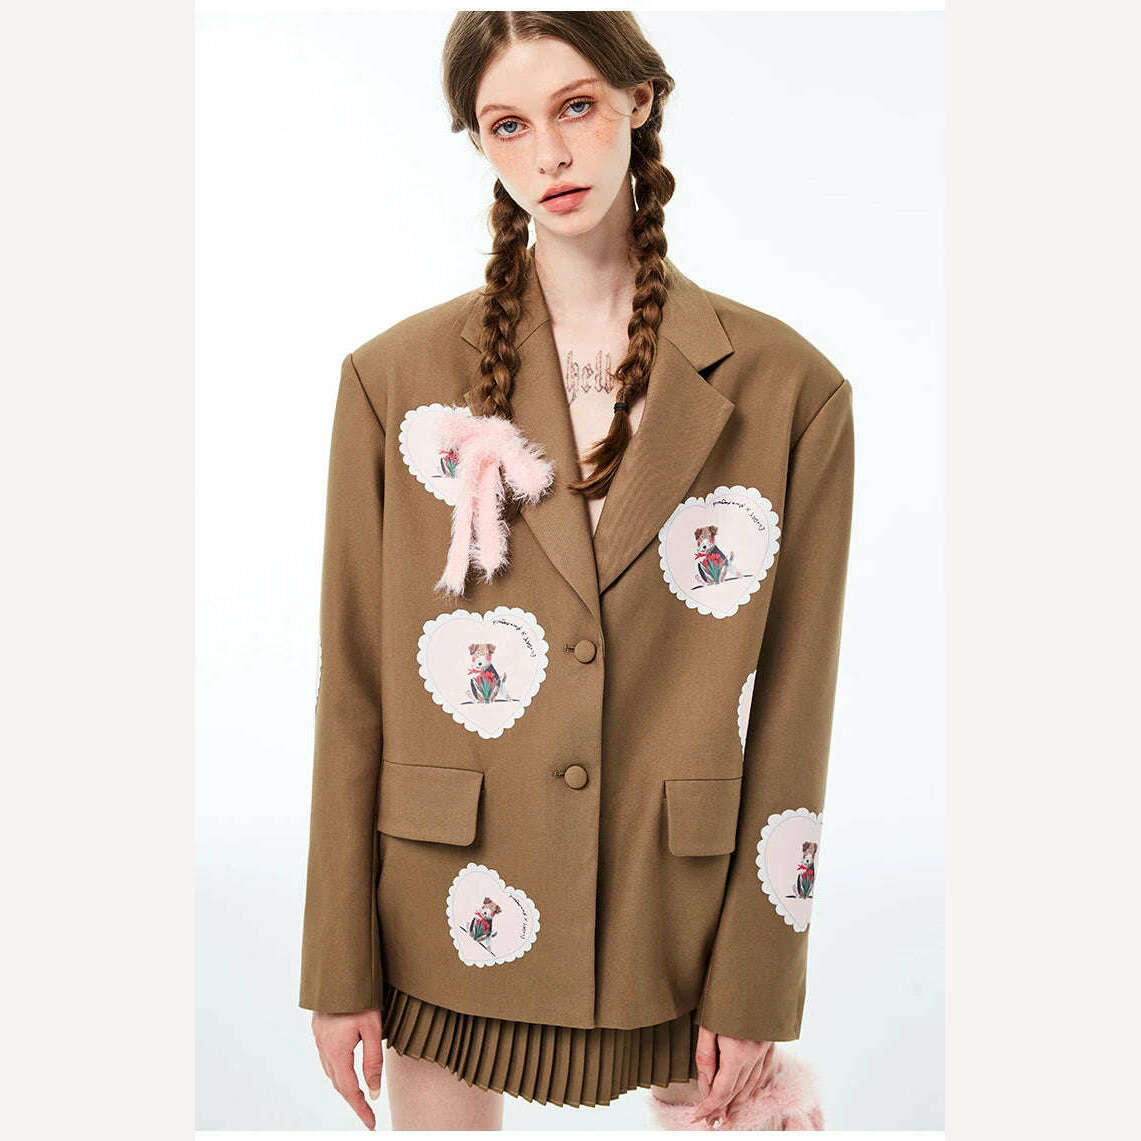 KIMLUD, Women's Design Suit Early Autumn Love Applique Loose Padded Shoulder High Sense Casual Suit Jacket, KIMLUD Women's Clothes